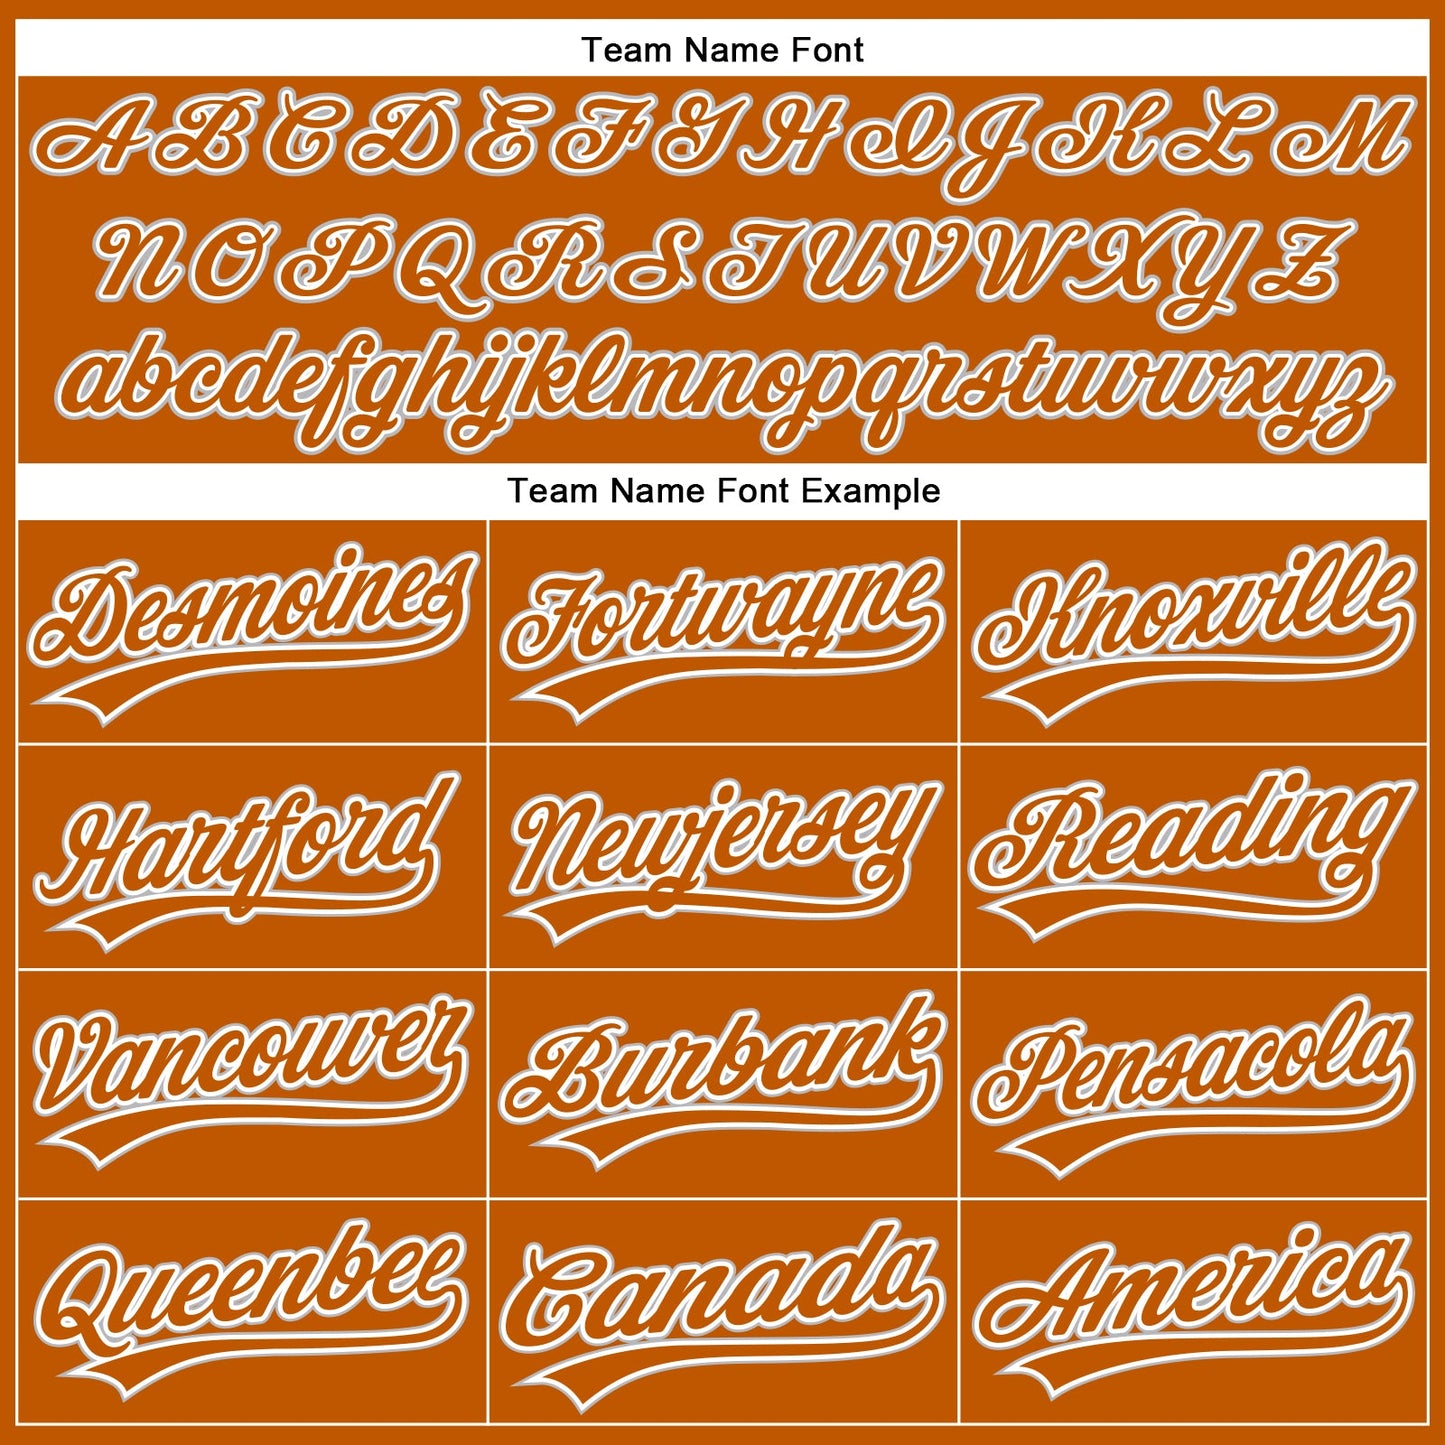 Custom Texas Orange White-Gray Authentic Baseball Jersey